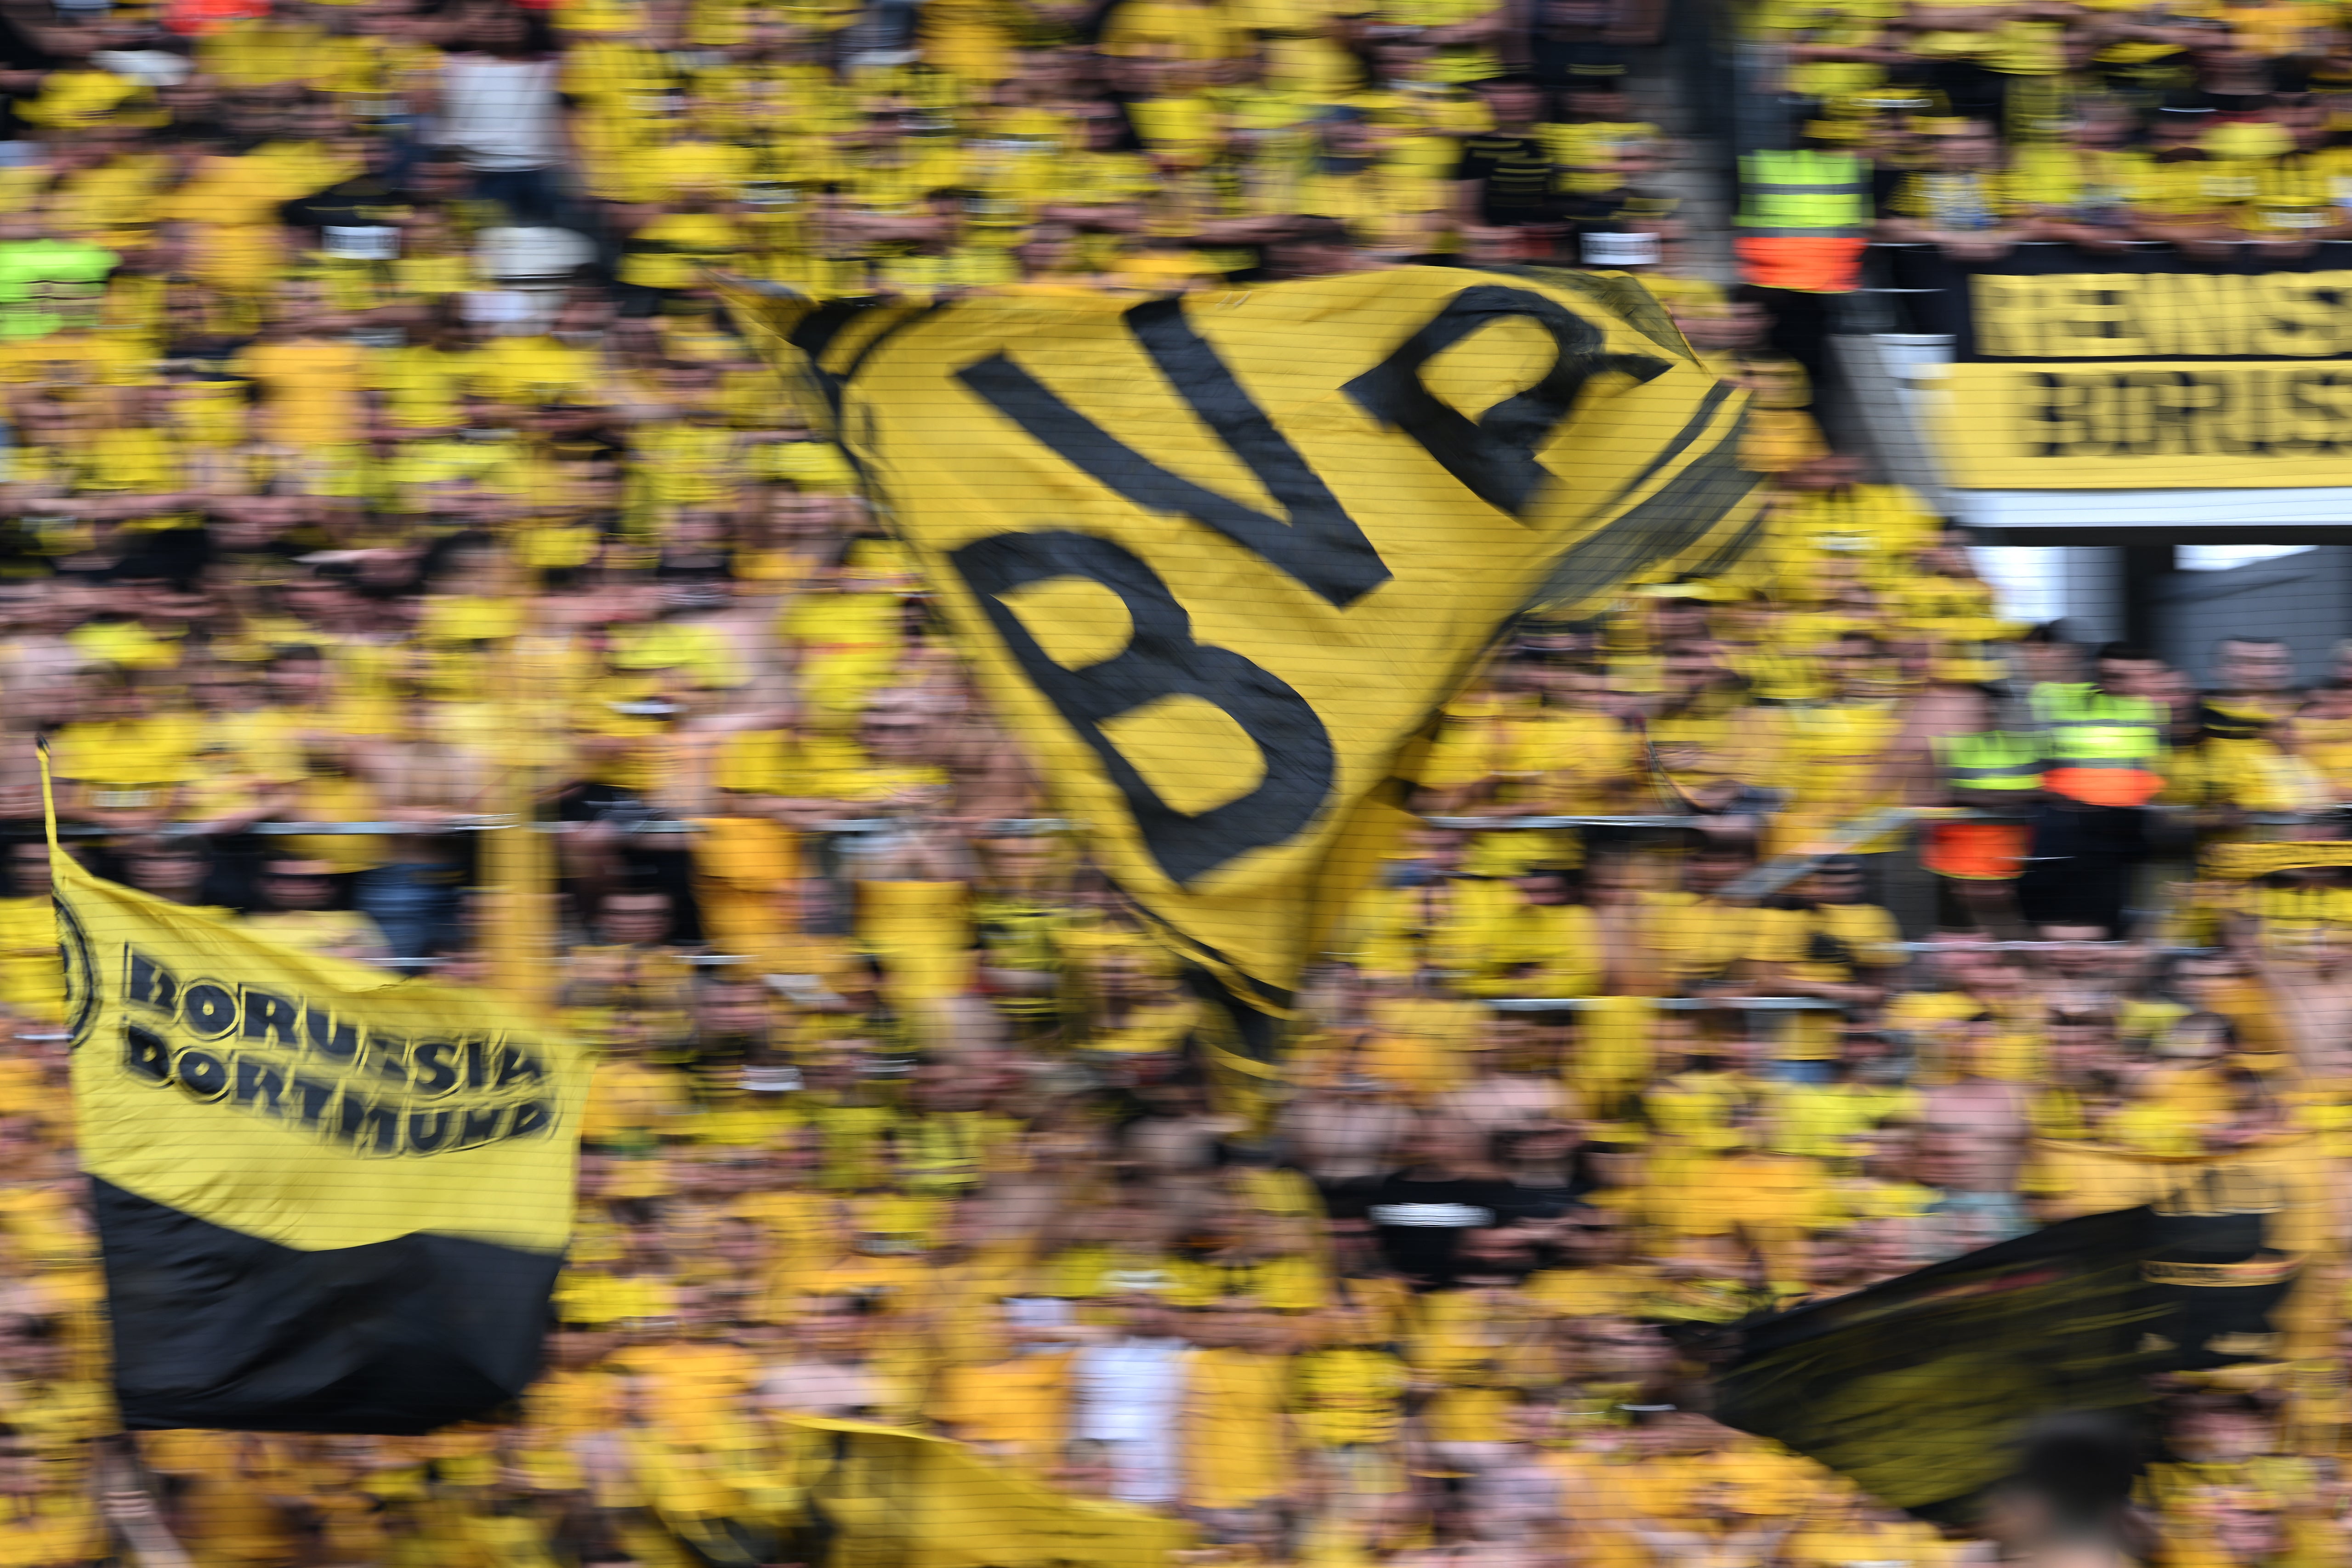 Borussia Dortmund came close to pipping Bayern Munich to the title last season